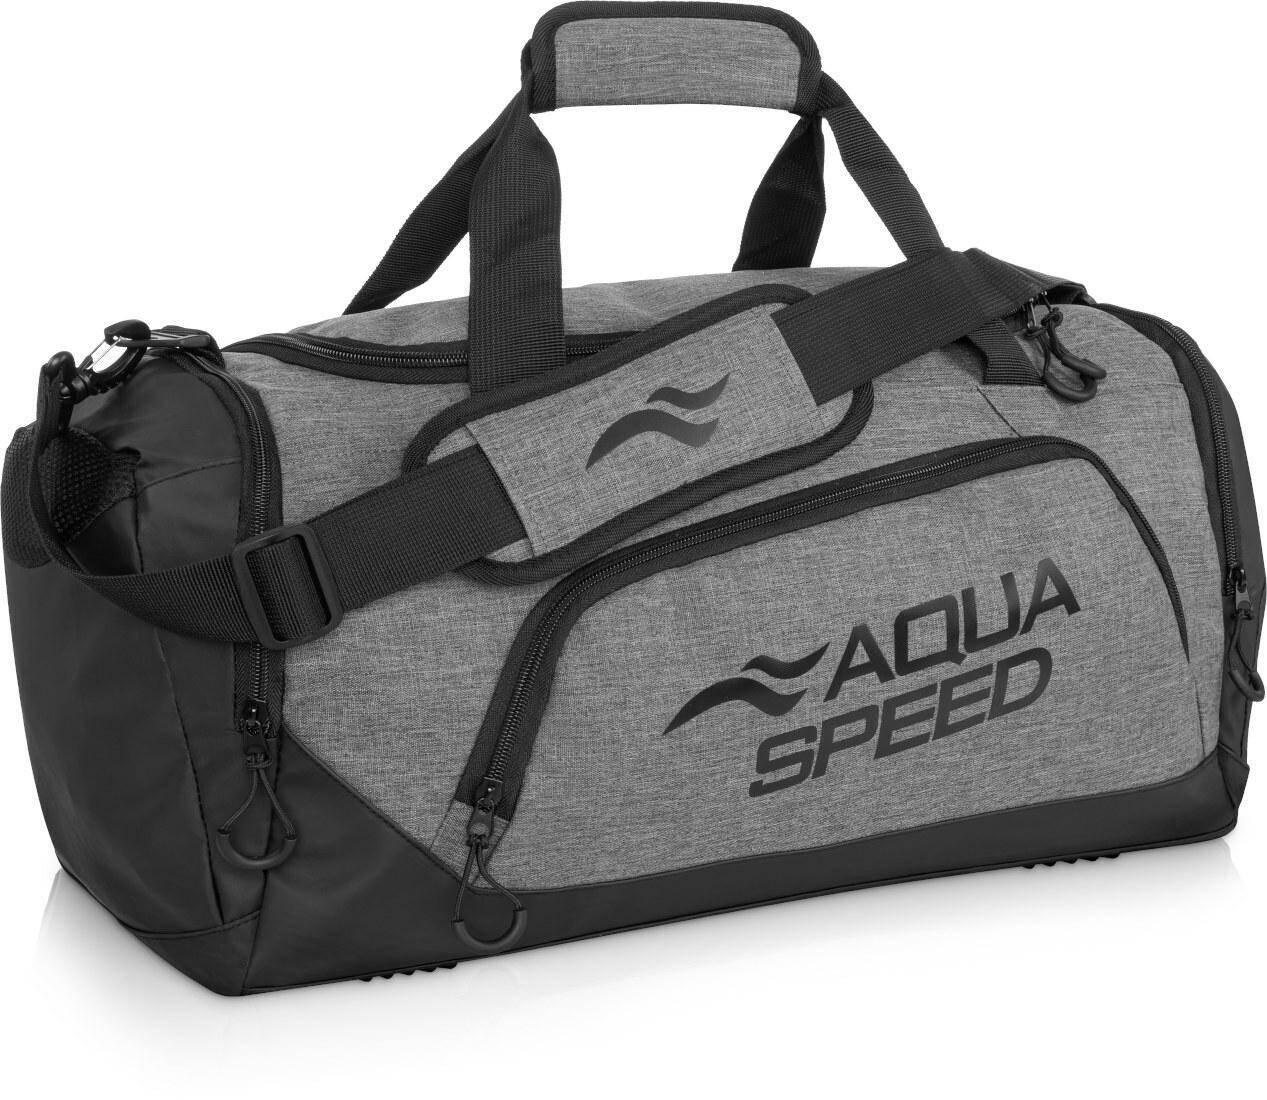 AQUA-SPEED duffle bag size M col. 37